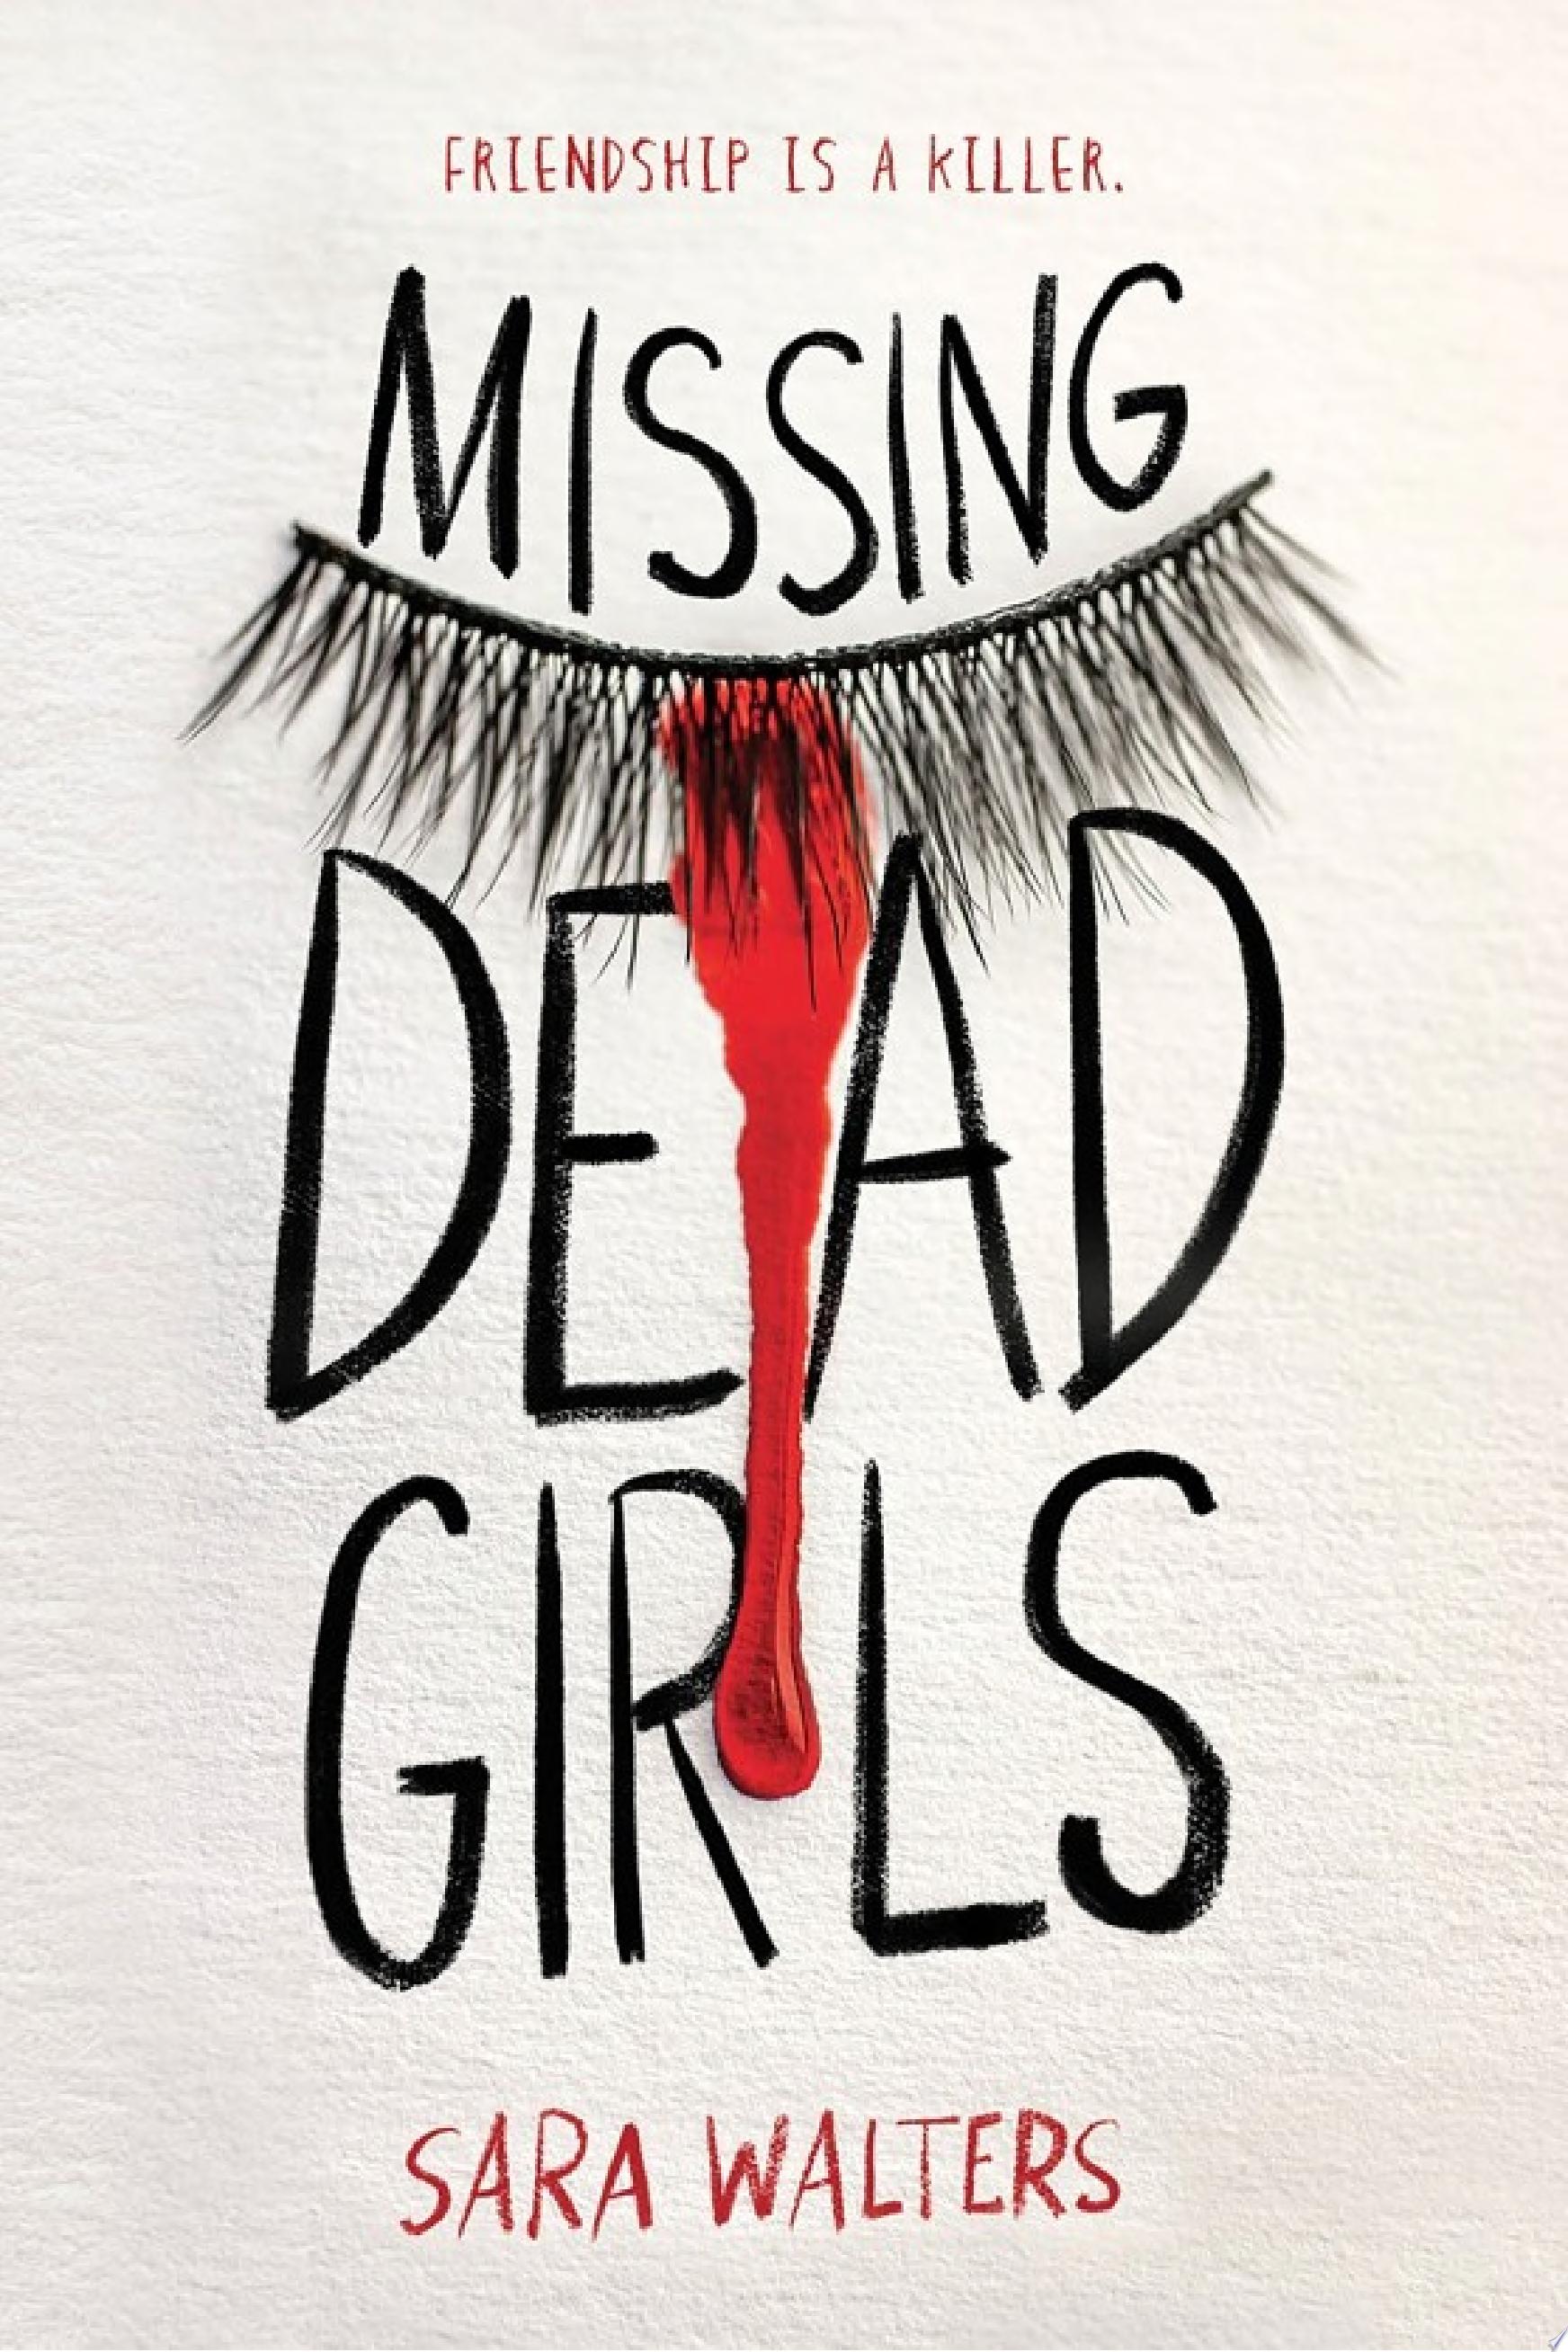 Image for "Missing Dead Girls"